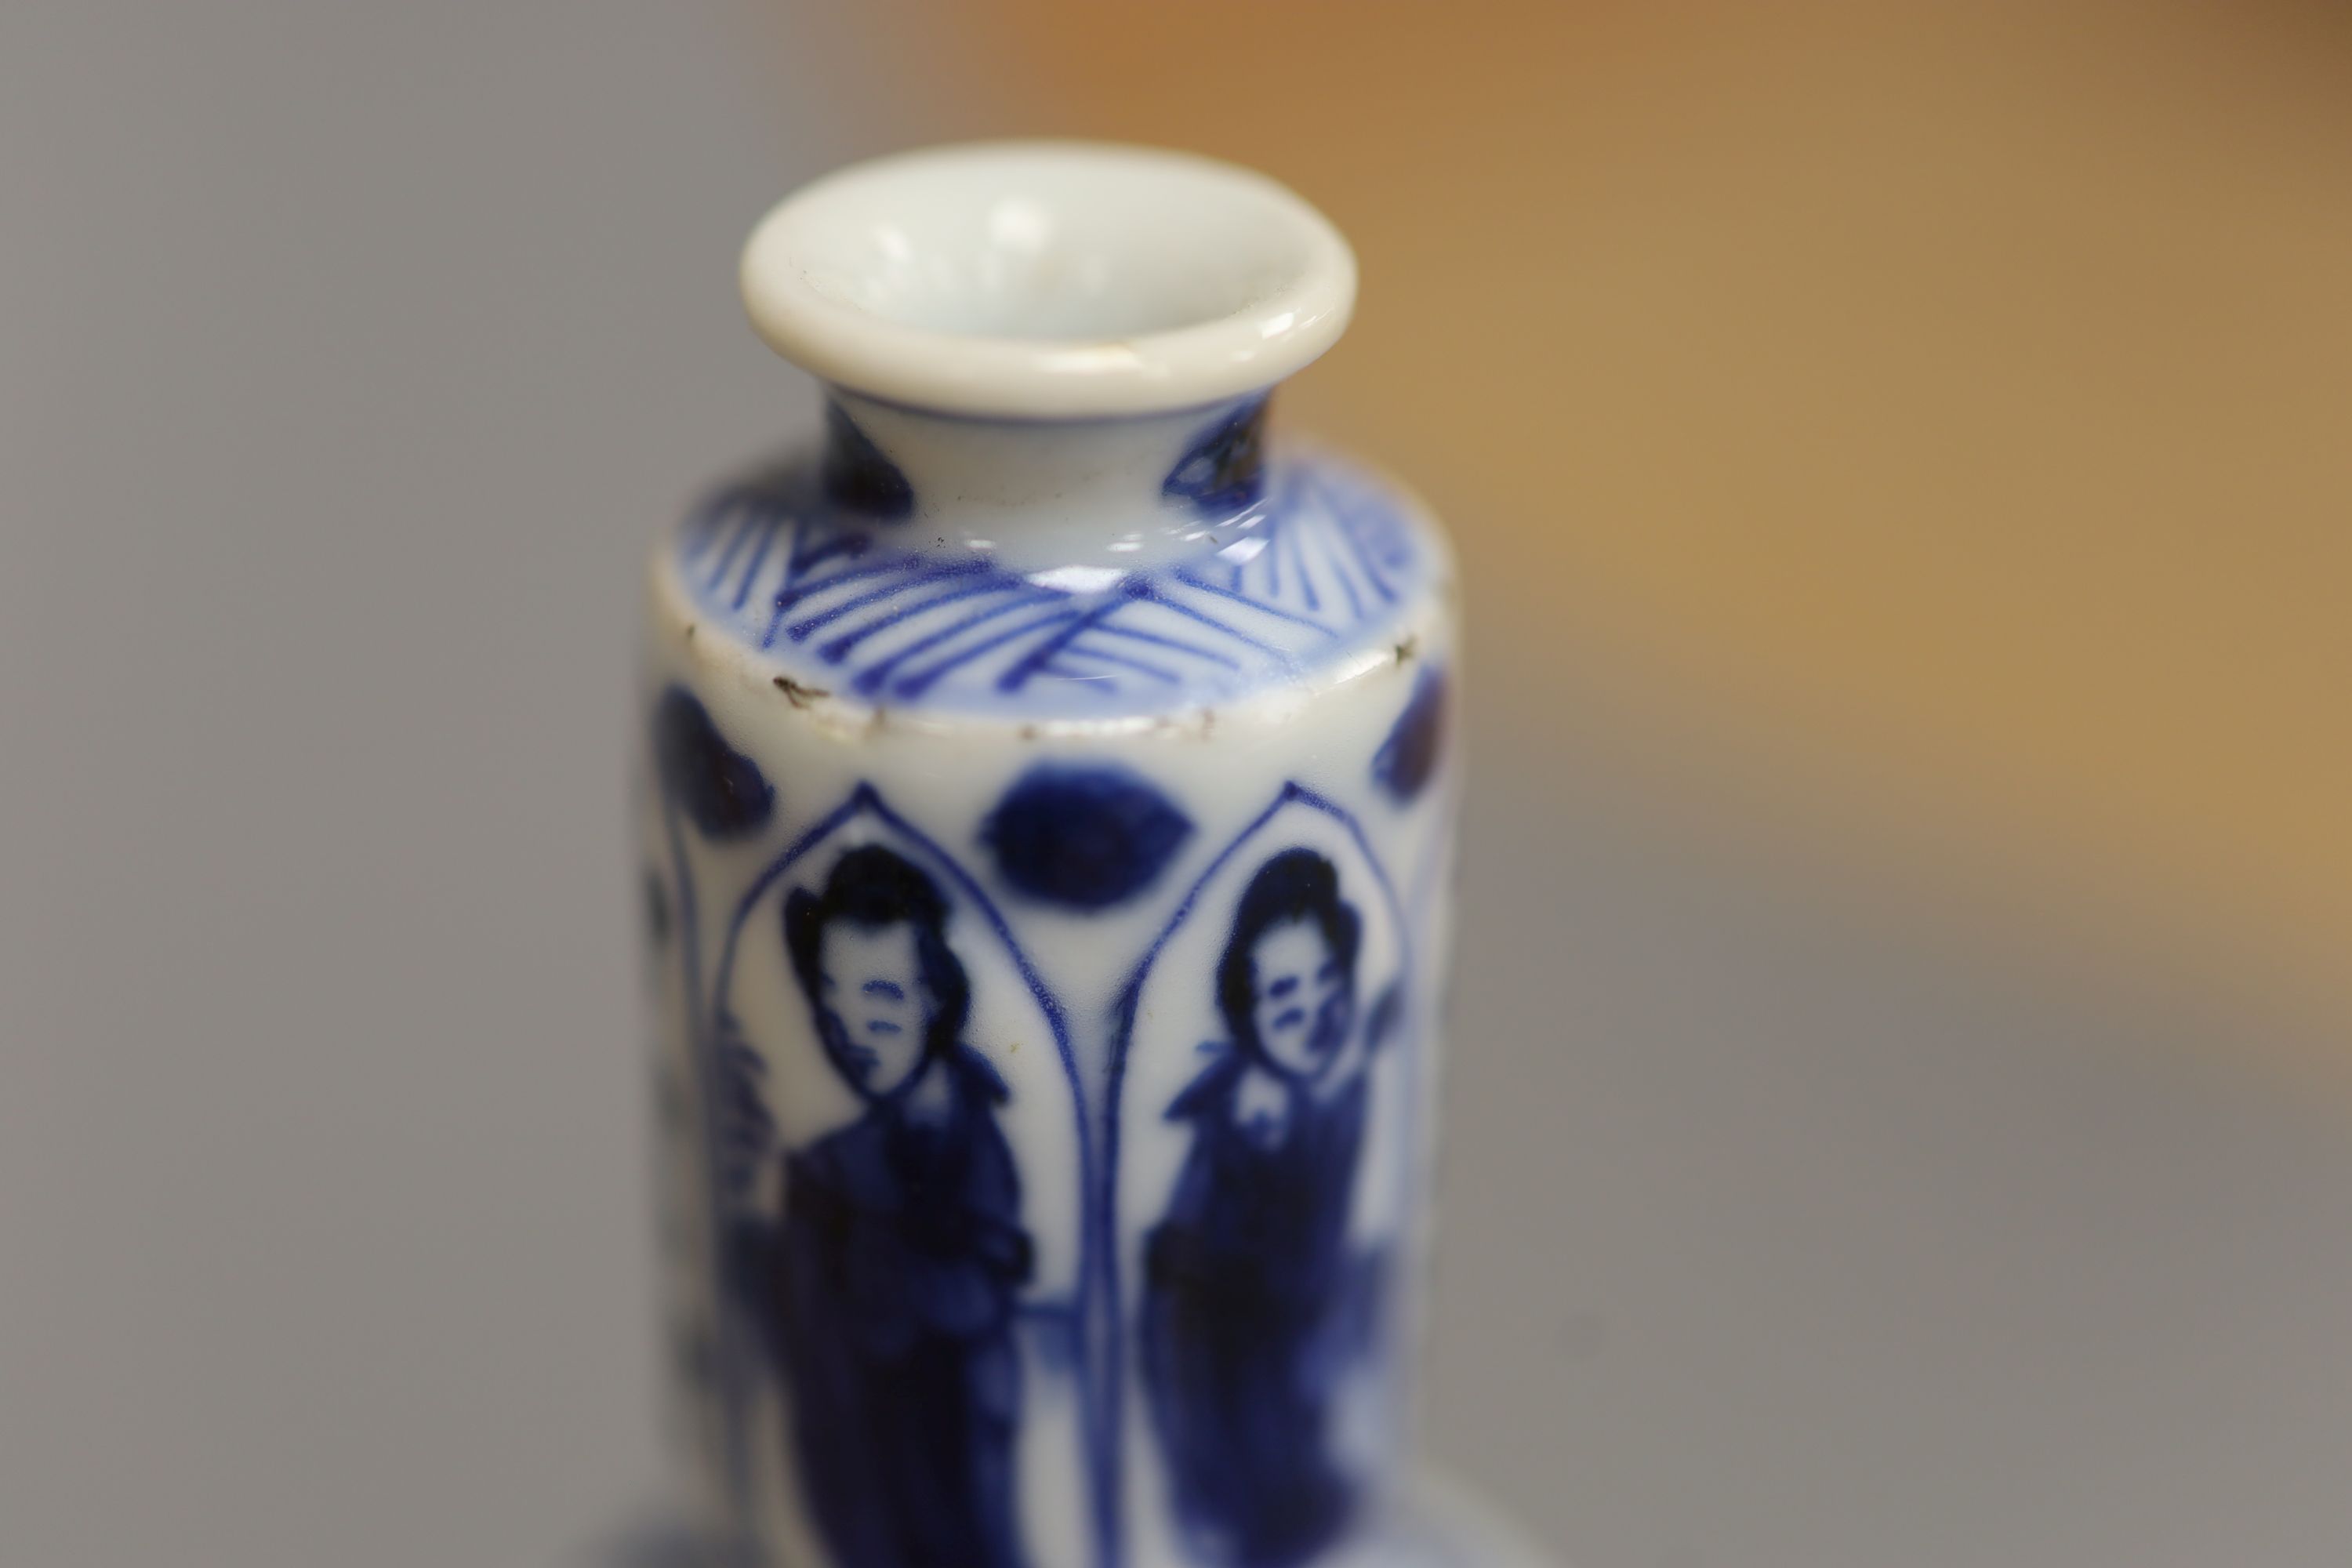 A Chinese Kangxi blue and white vase, ‘Jade’ mark to base, height 13cm - Image 5 of 7